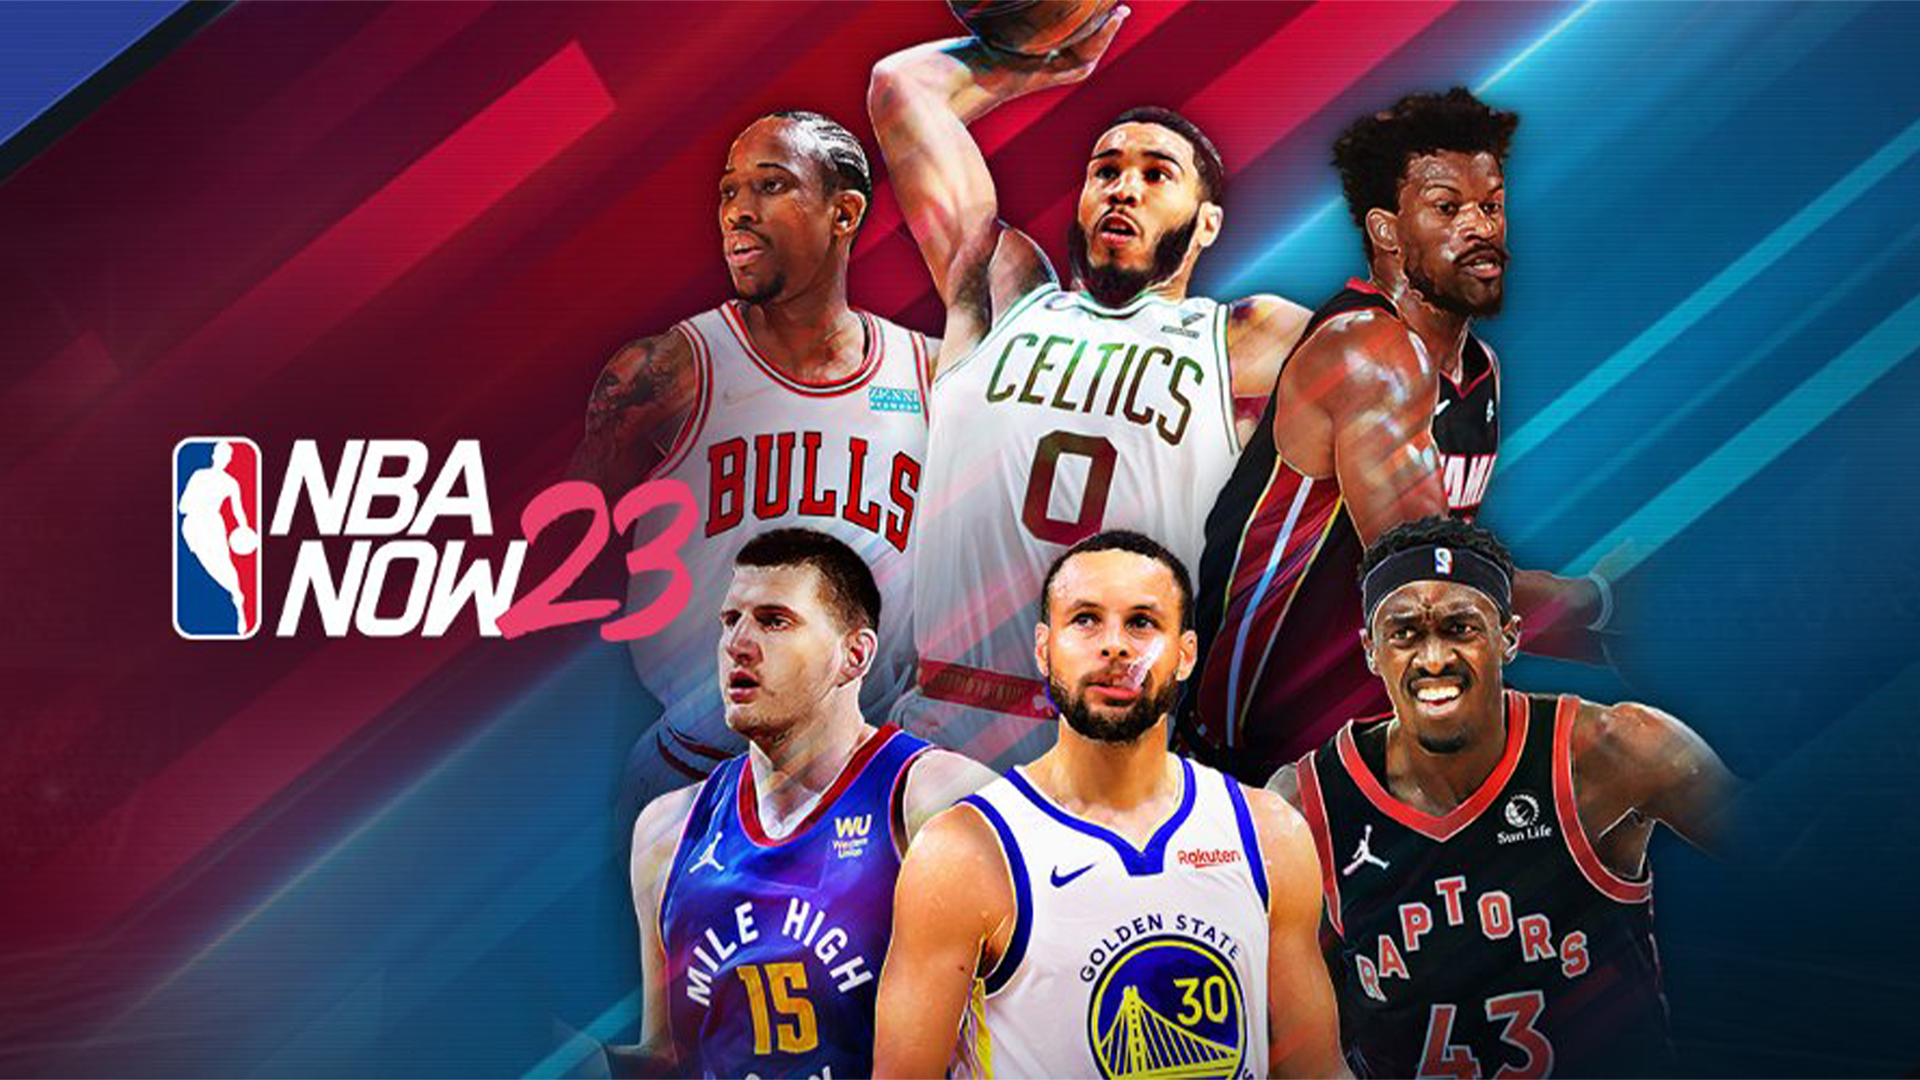 NBA Now 23 New 2023 Season Update